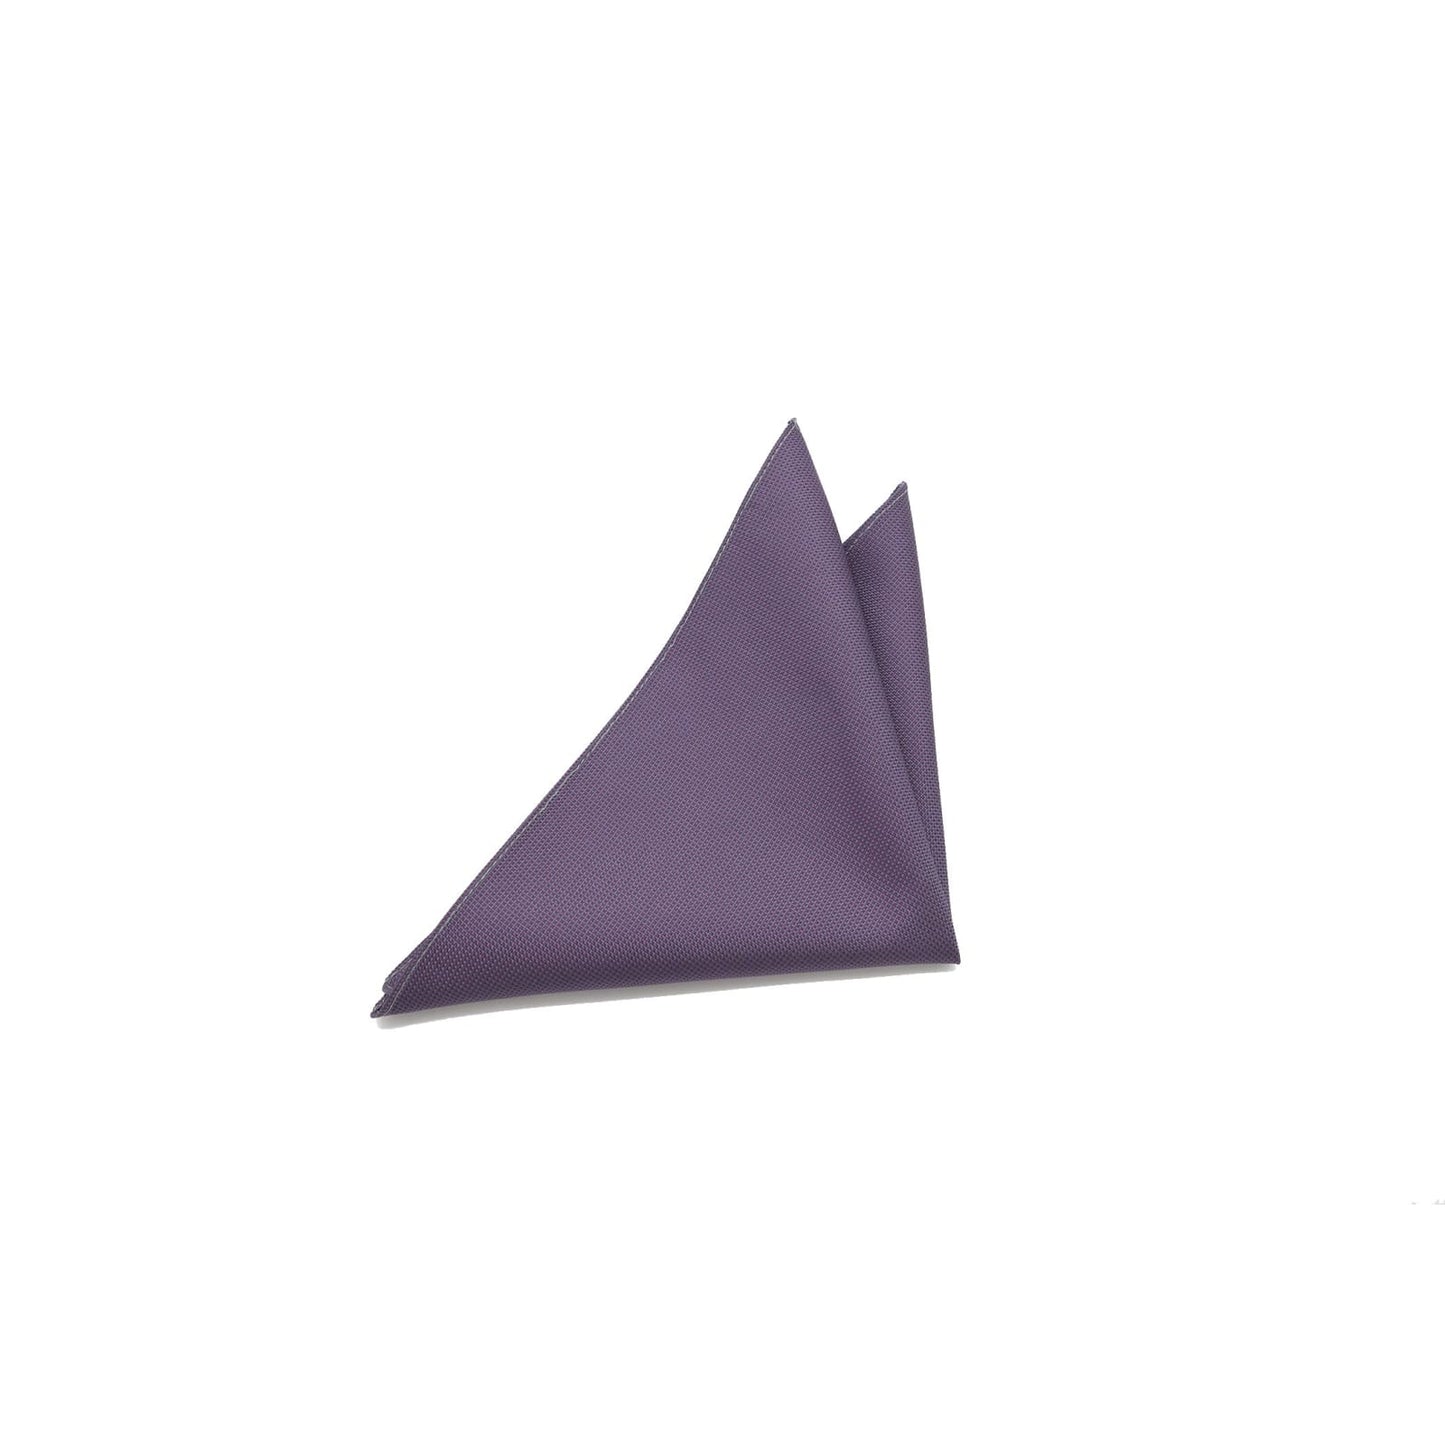 BERLIN BOW handkerchief - 2064 purple violet - accessories